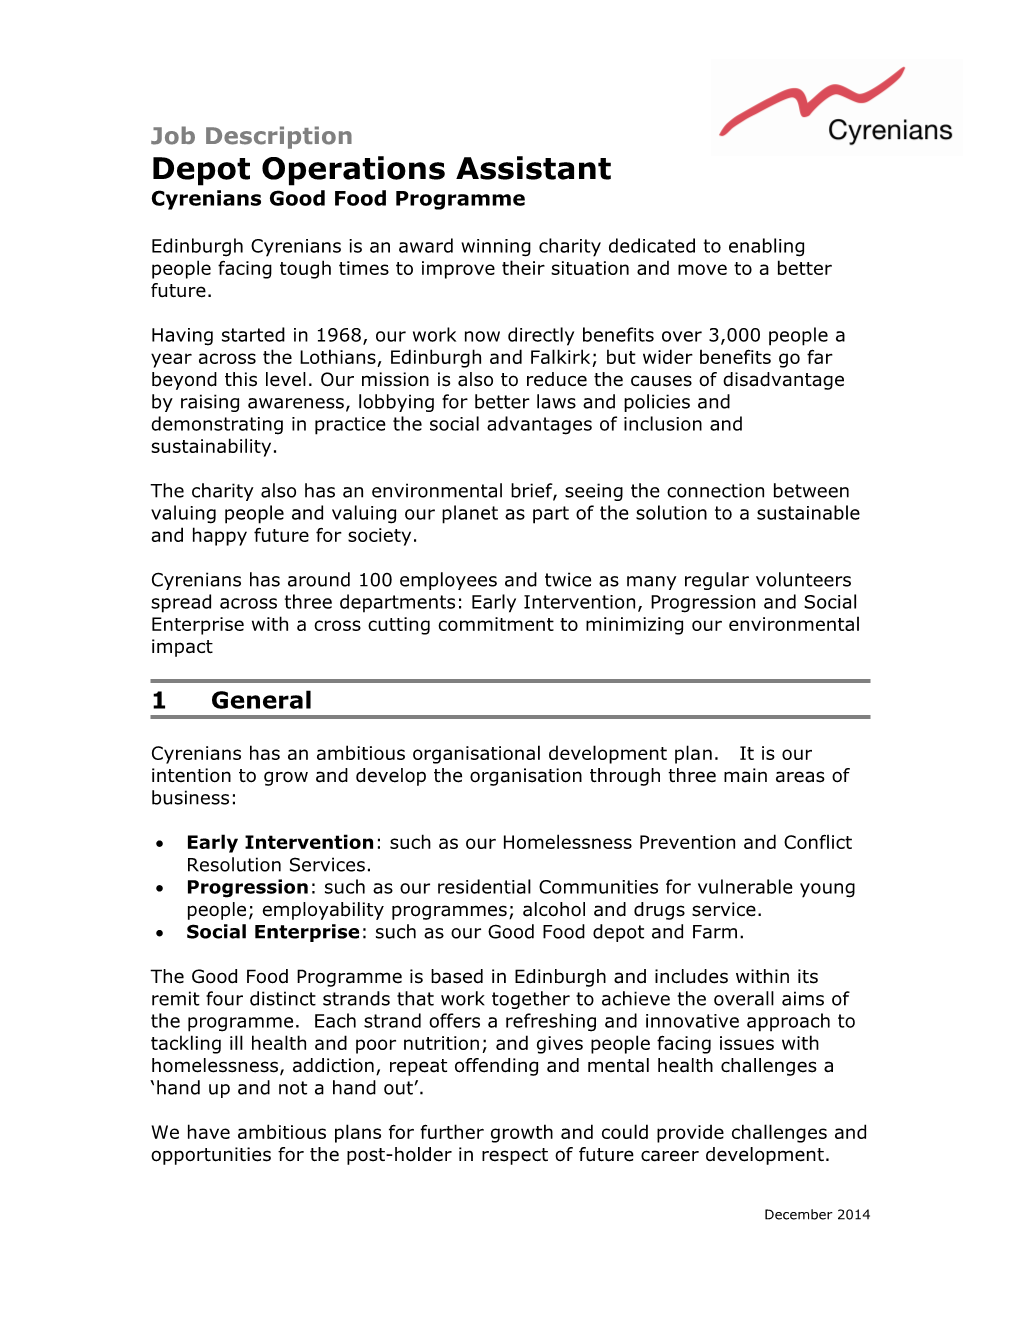 Job Description Co-Ordinator